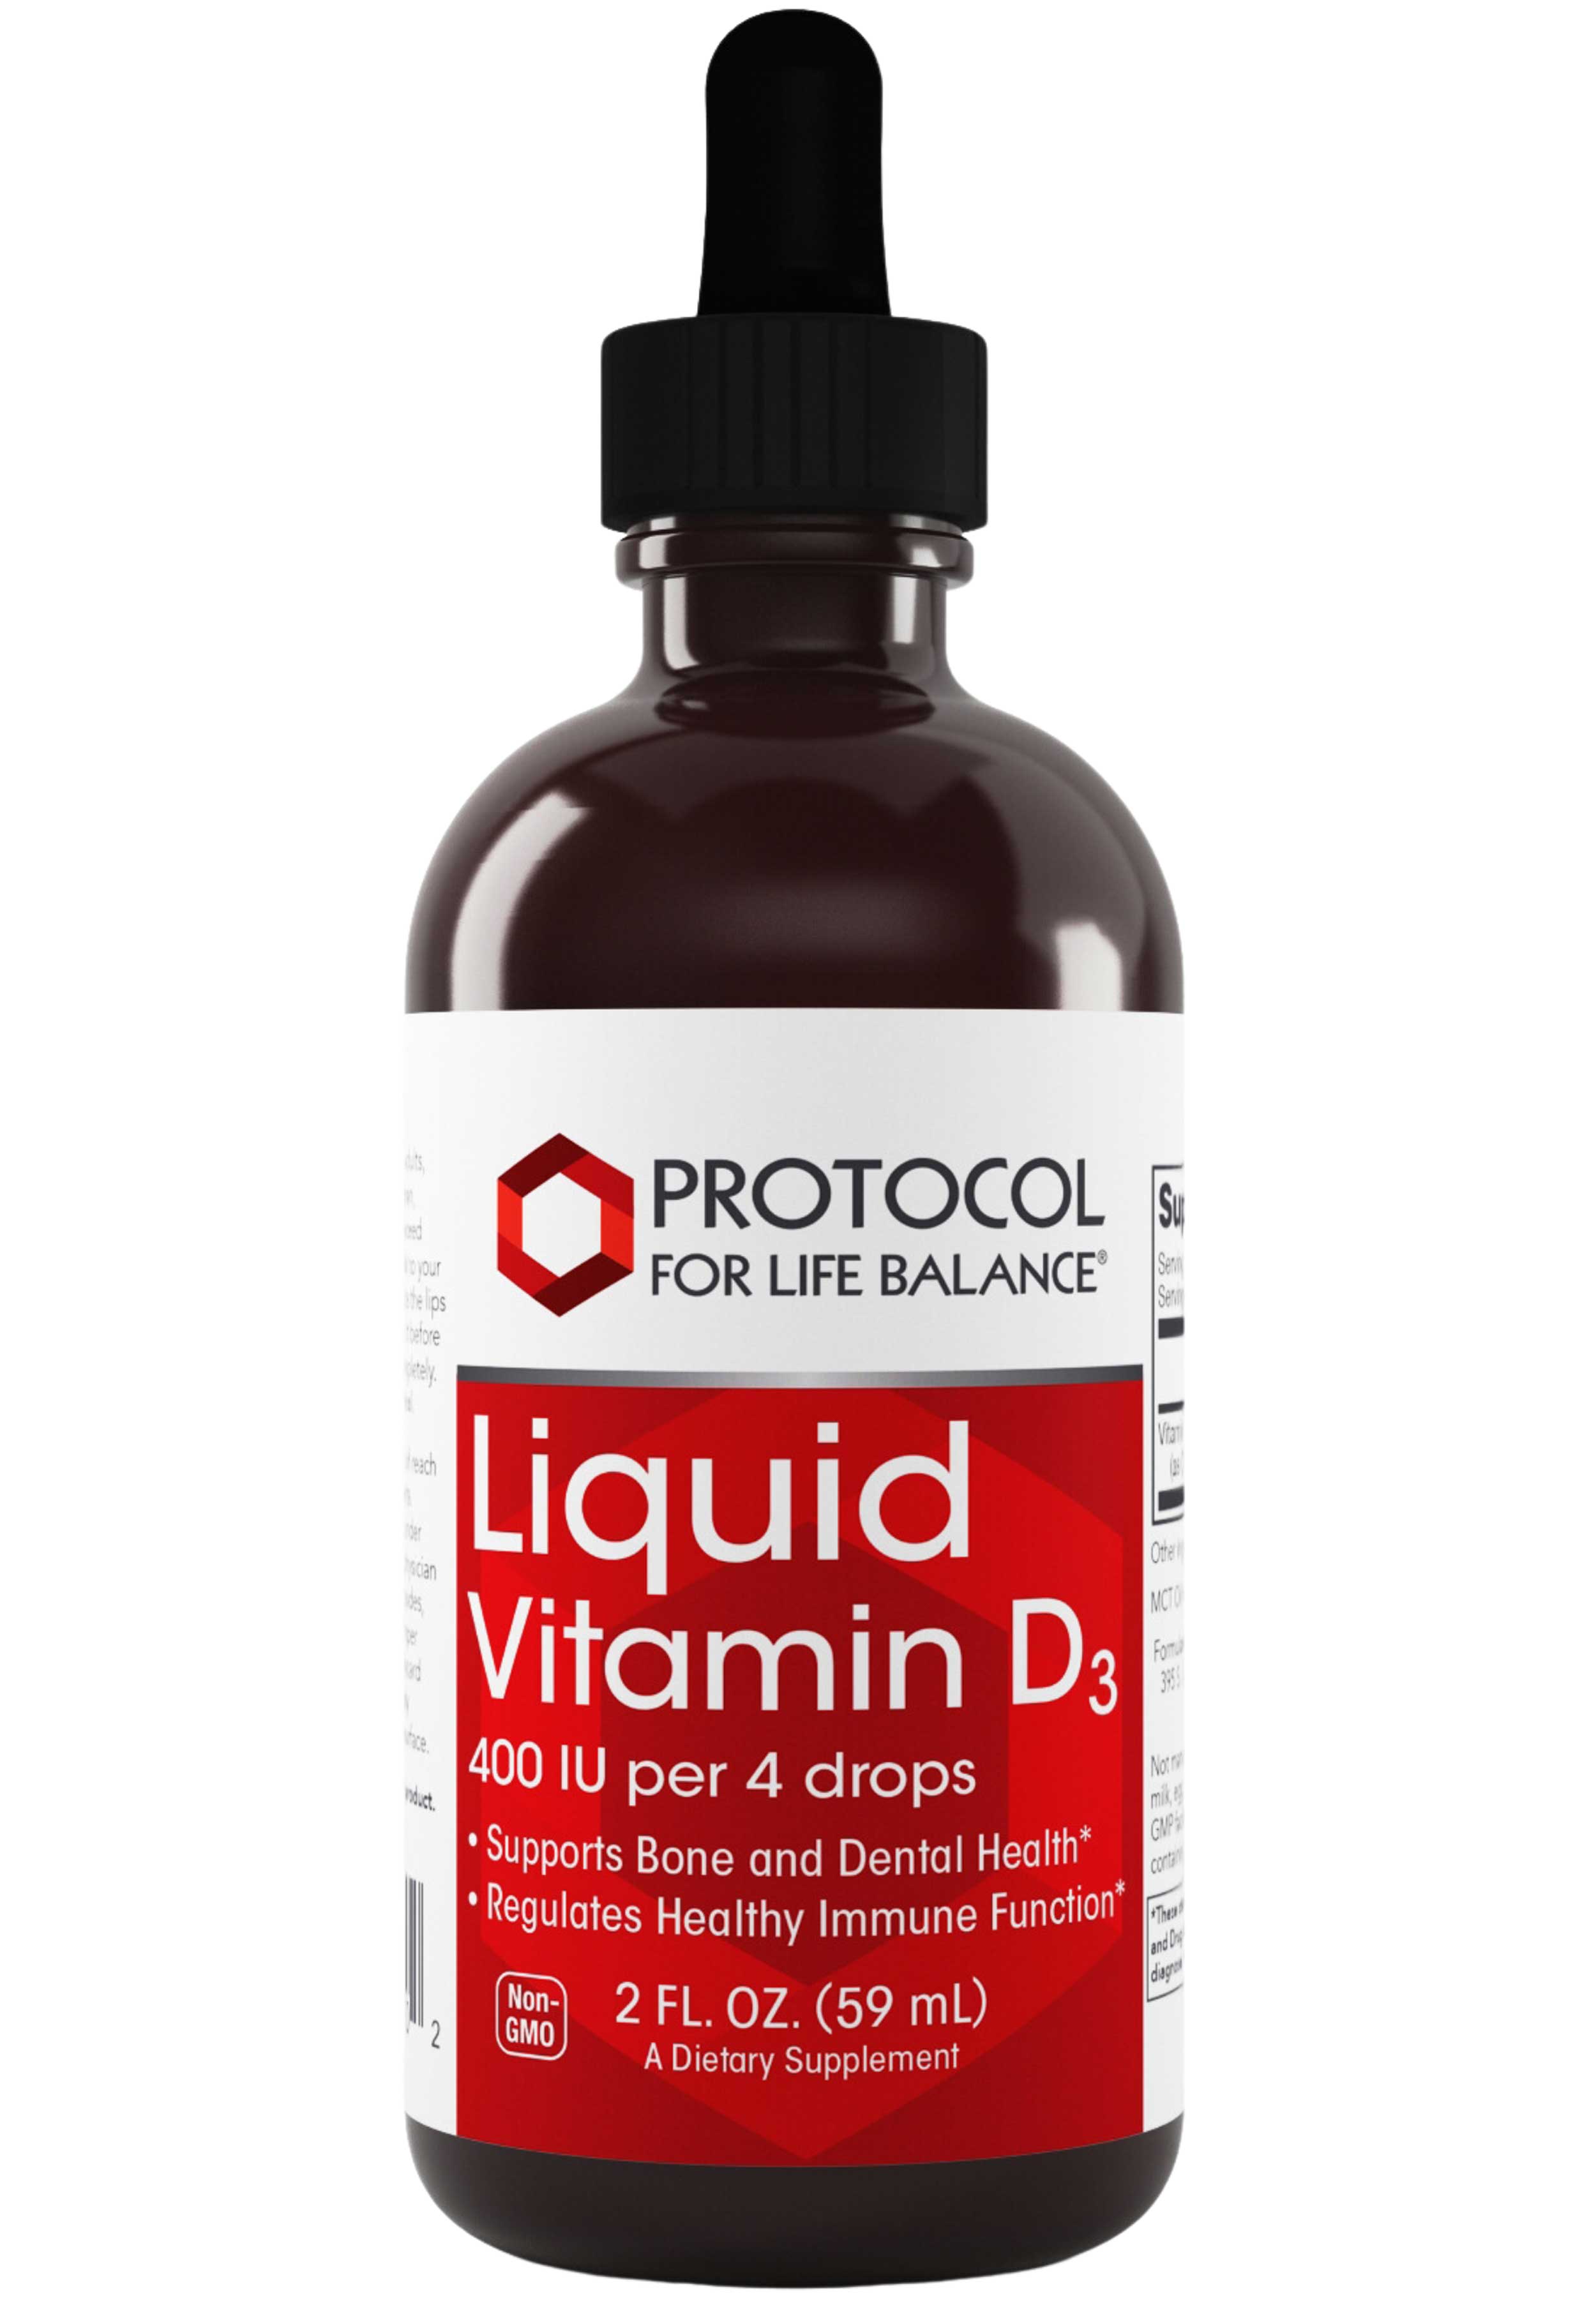 Protocol for Life Balance Liquid Vitamin D3 400 IU